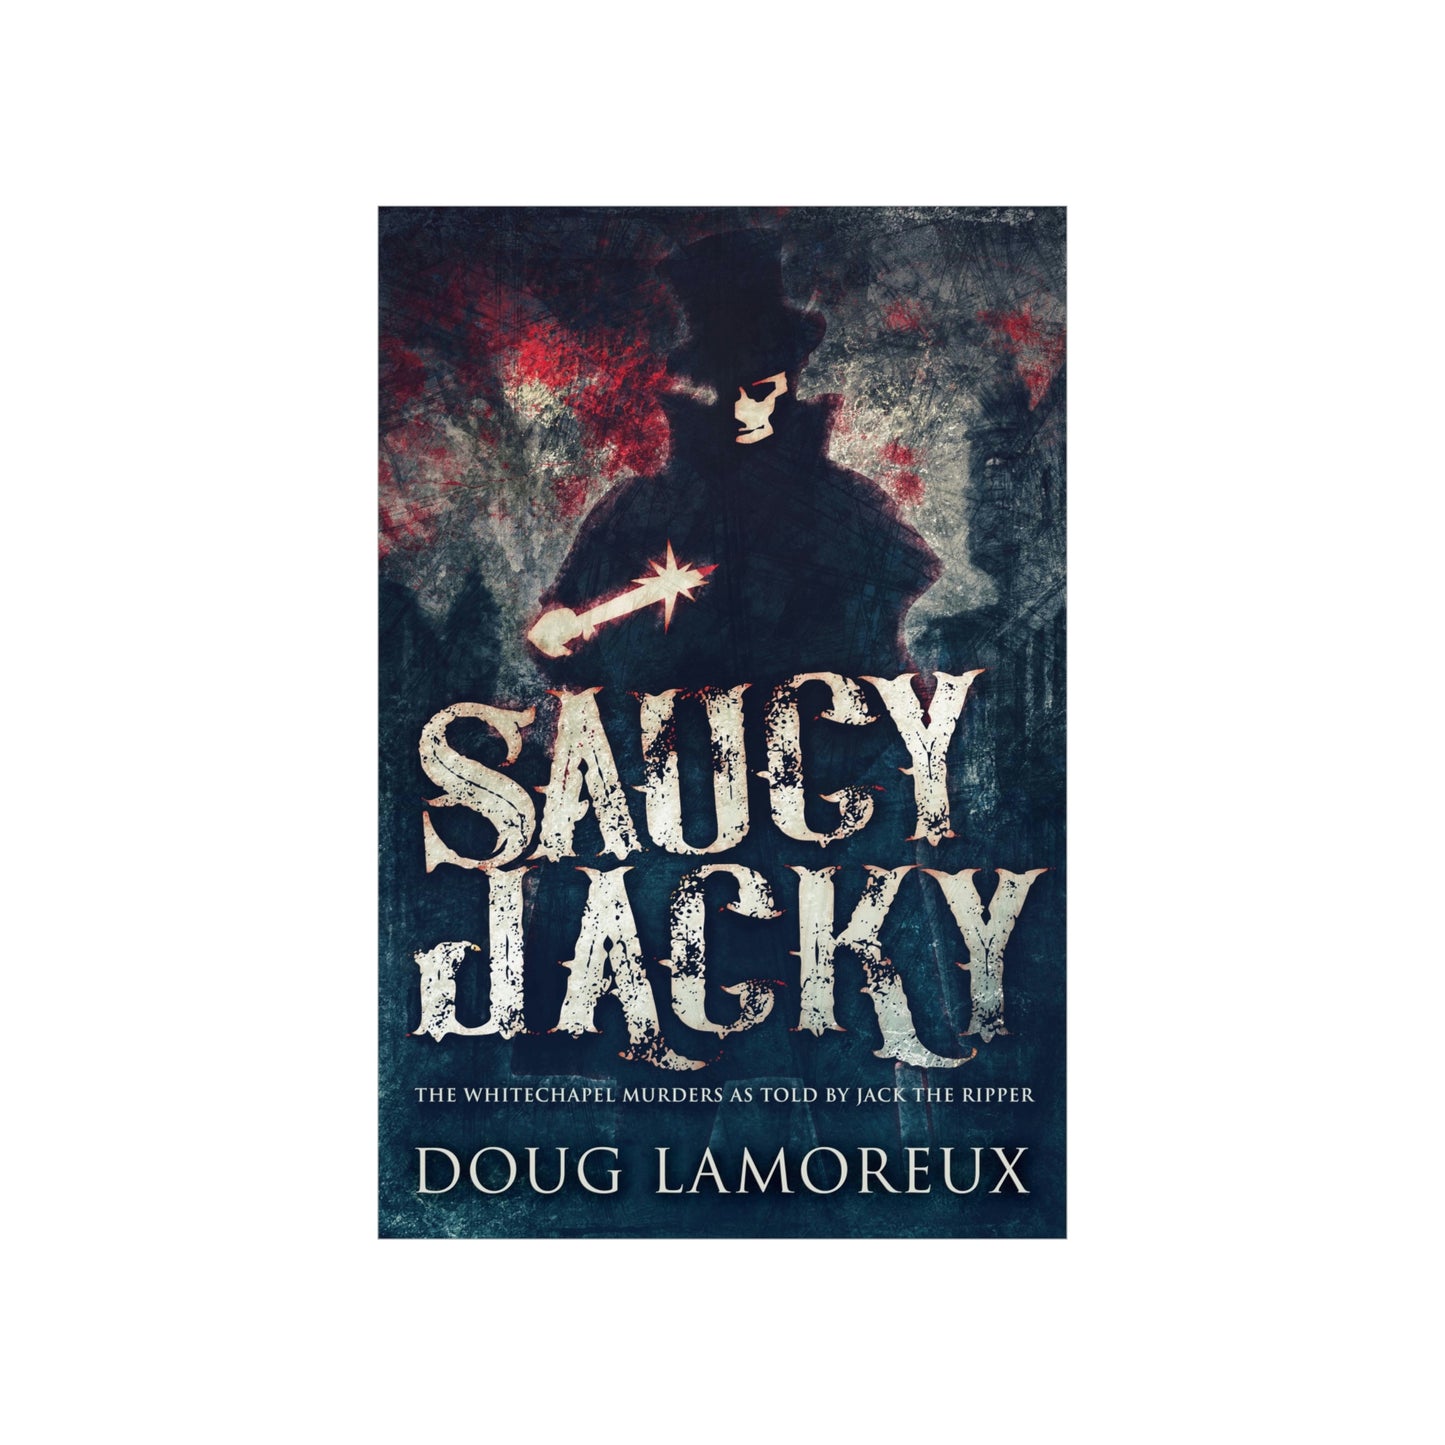 Saucy Jacky - Matte Poster